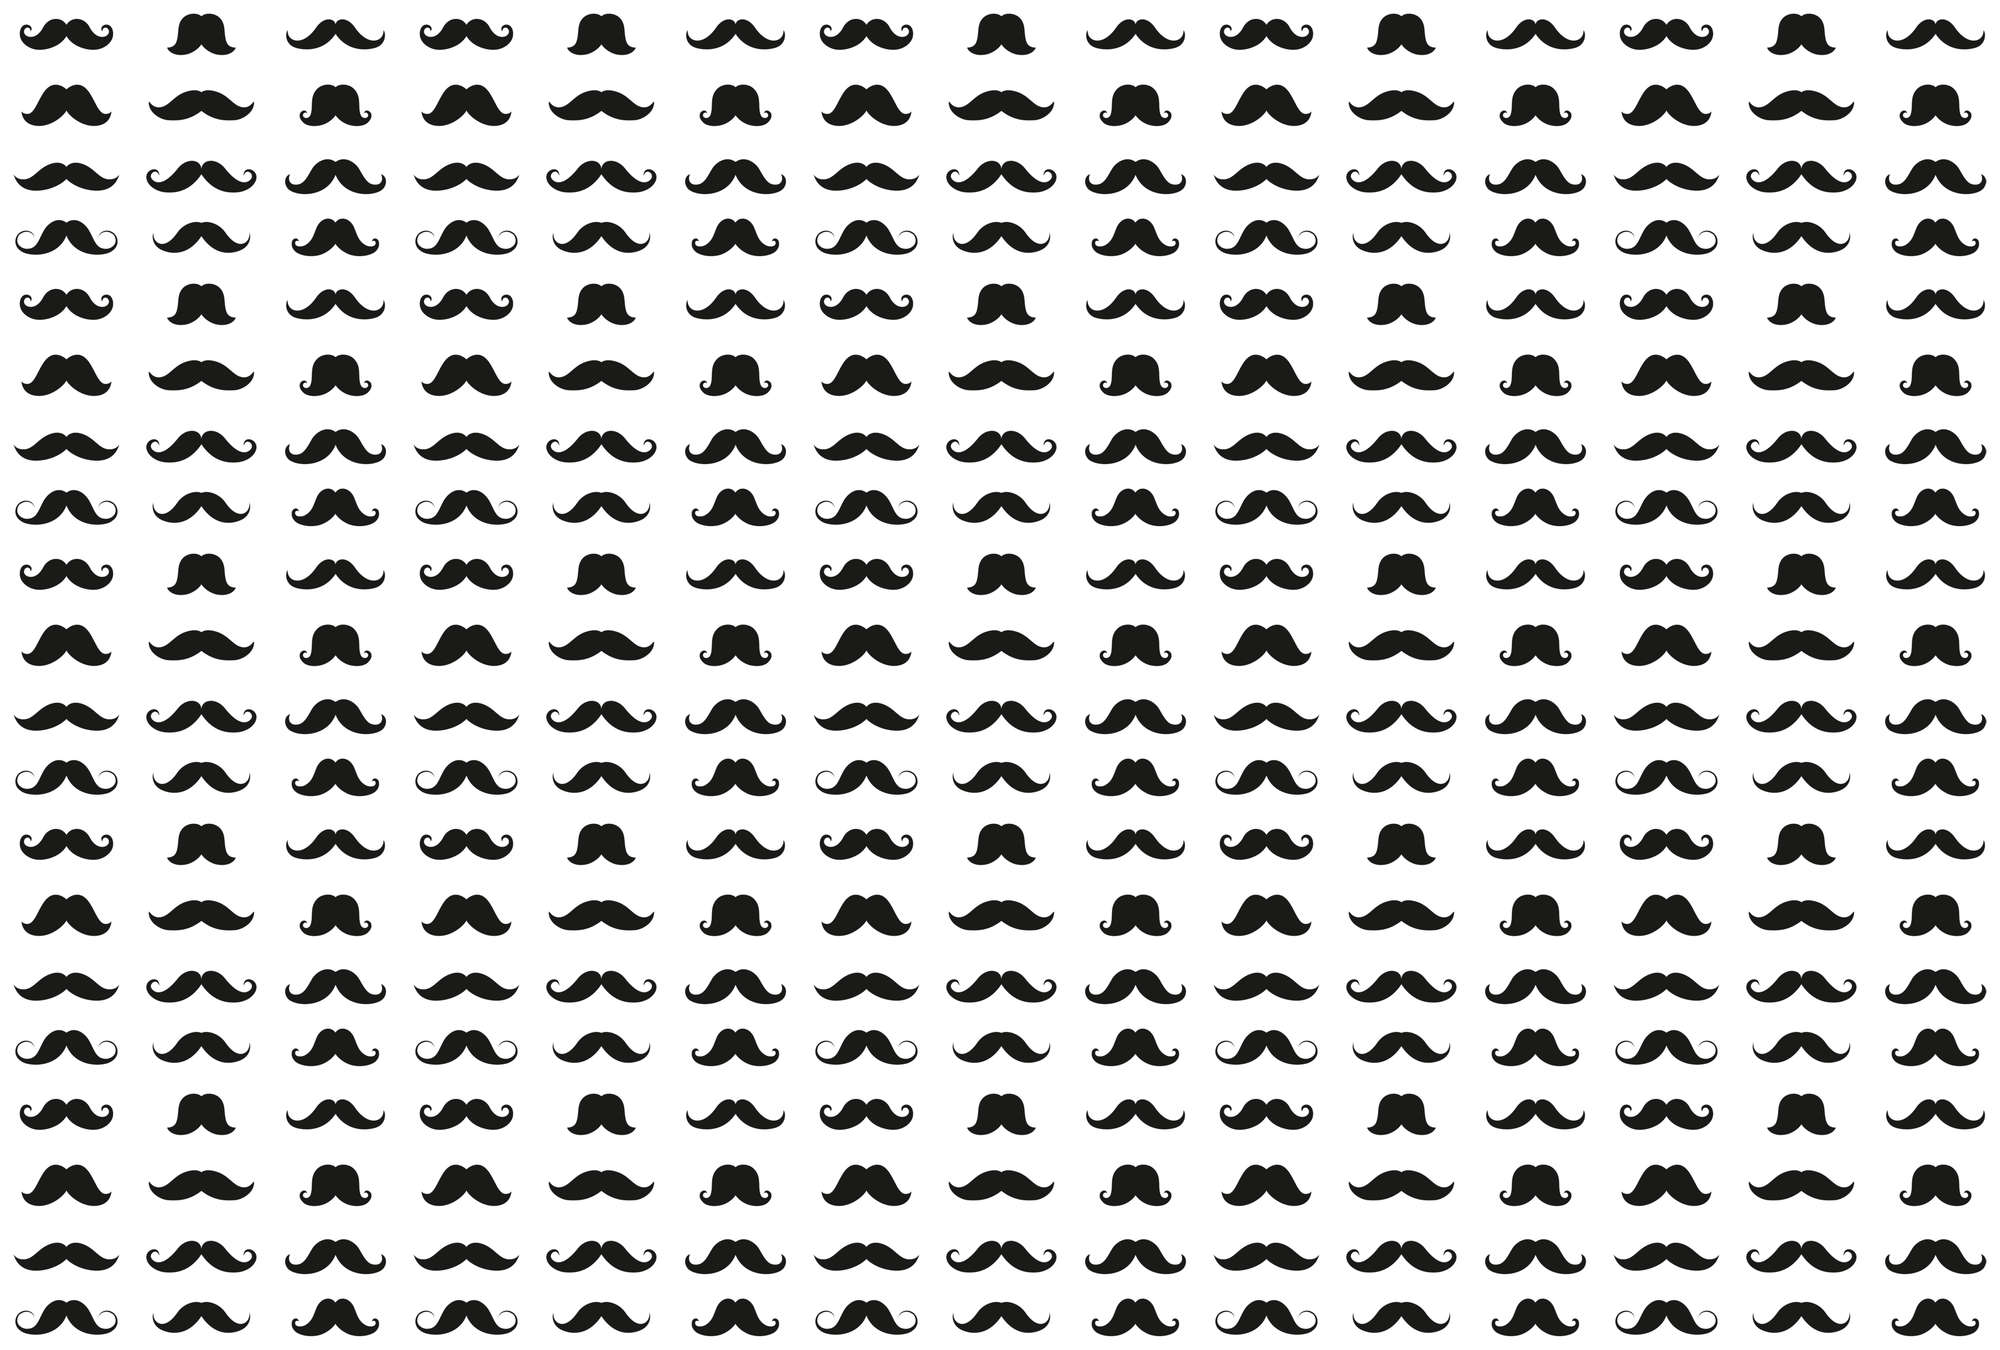             Photo wallpaper Mustache cool moustache motif - black and white - pearl smooth non-woven
        